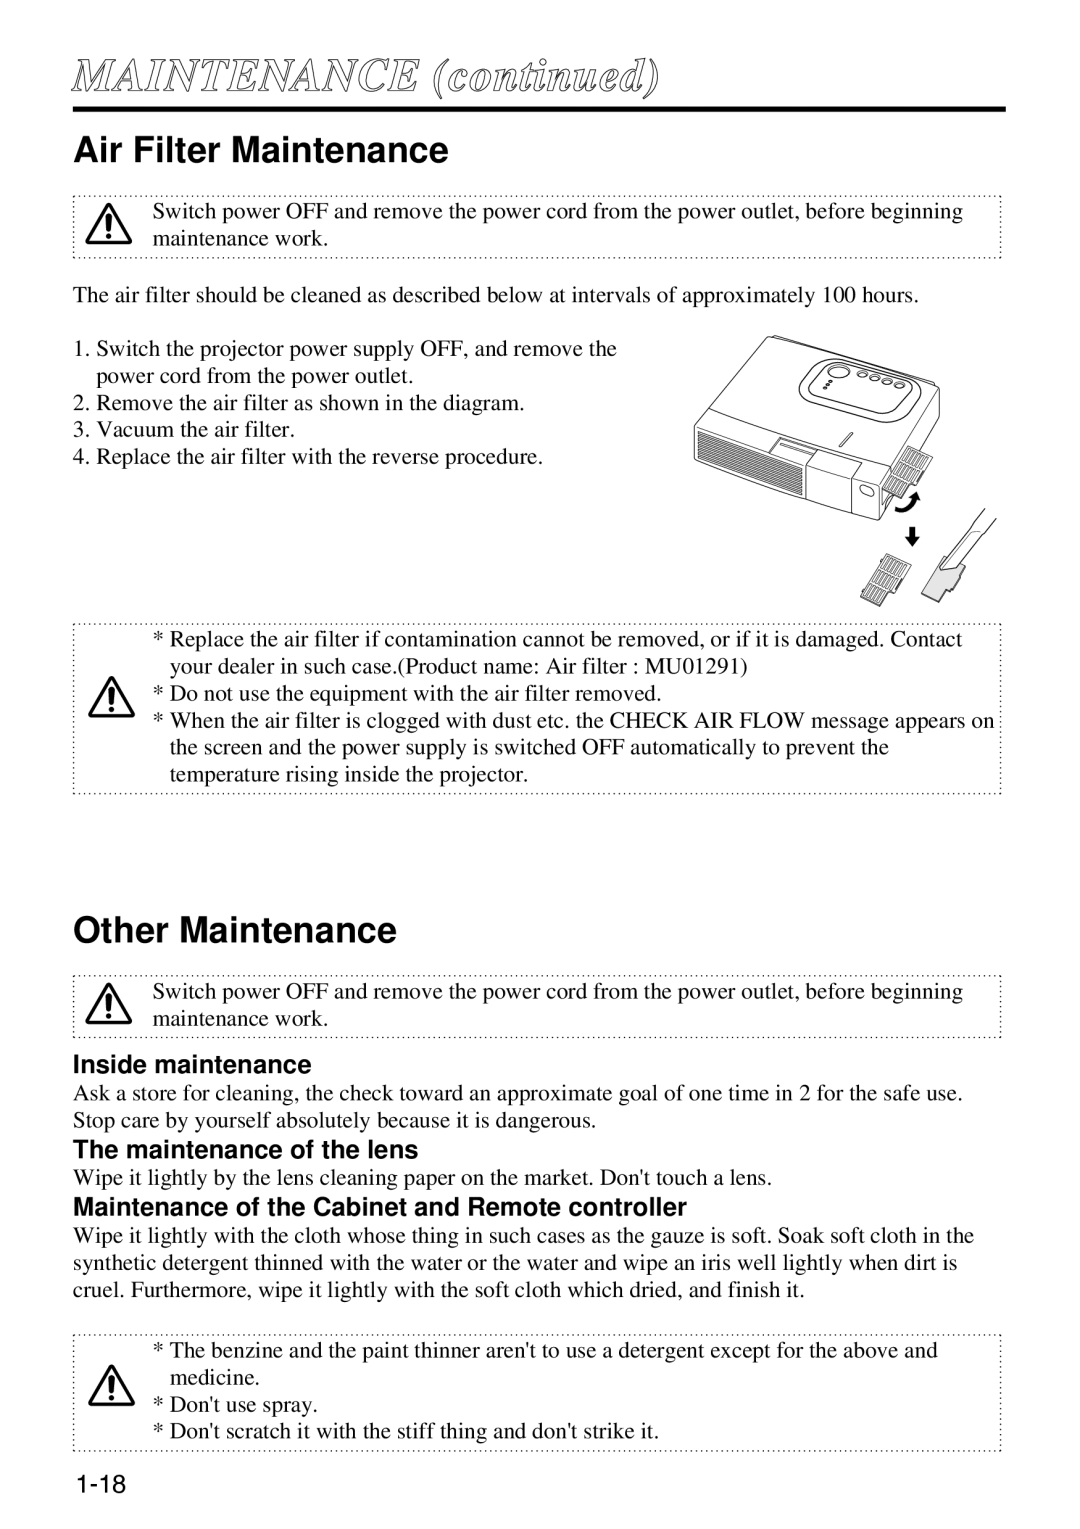 Polaroid SVGA 270 manual Air Filter Maintenance, Other Maintenance, Inside maintenance, The maintenance of the lens 